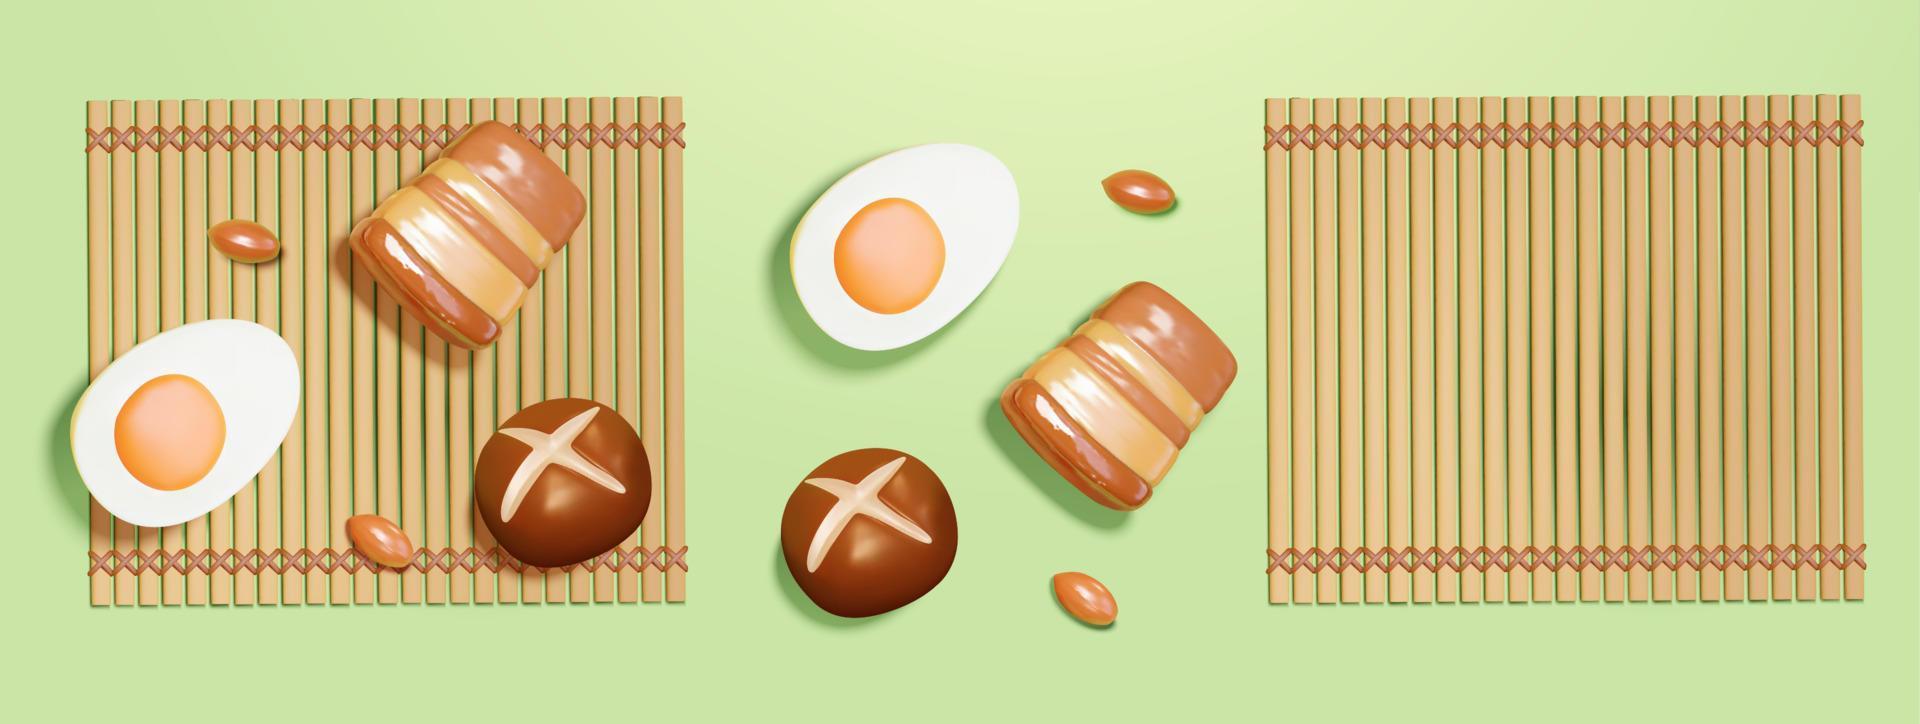 3d dibujos animados comida ingredientes de pegajoso arroz bola de masa hervida metido en tradicional bambú estera. duanwu festival elementos aislado en verde antecedentes. vector